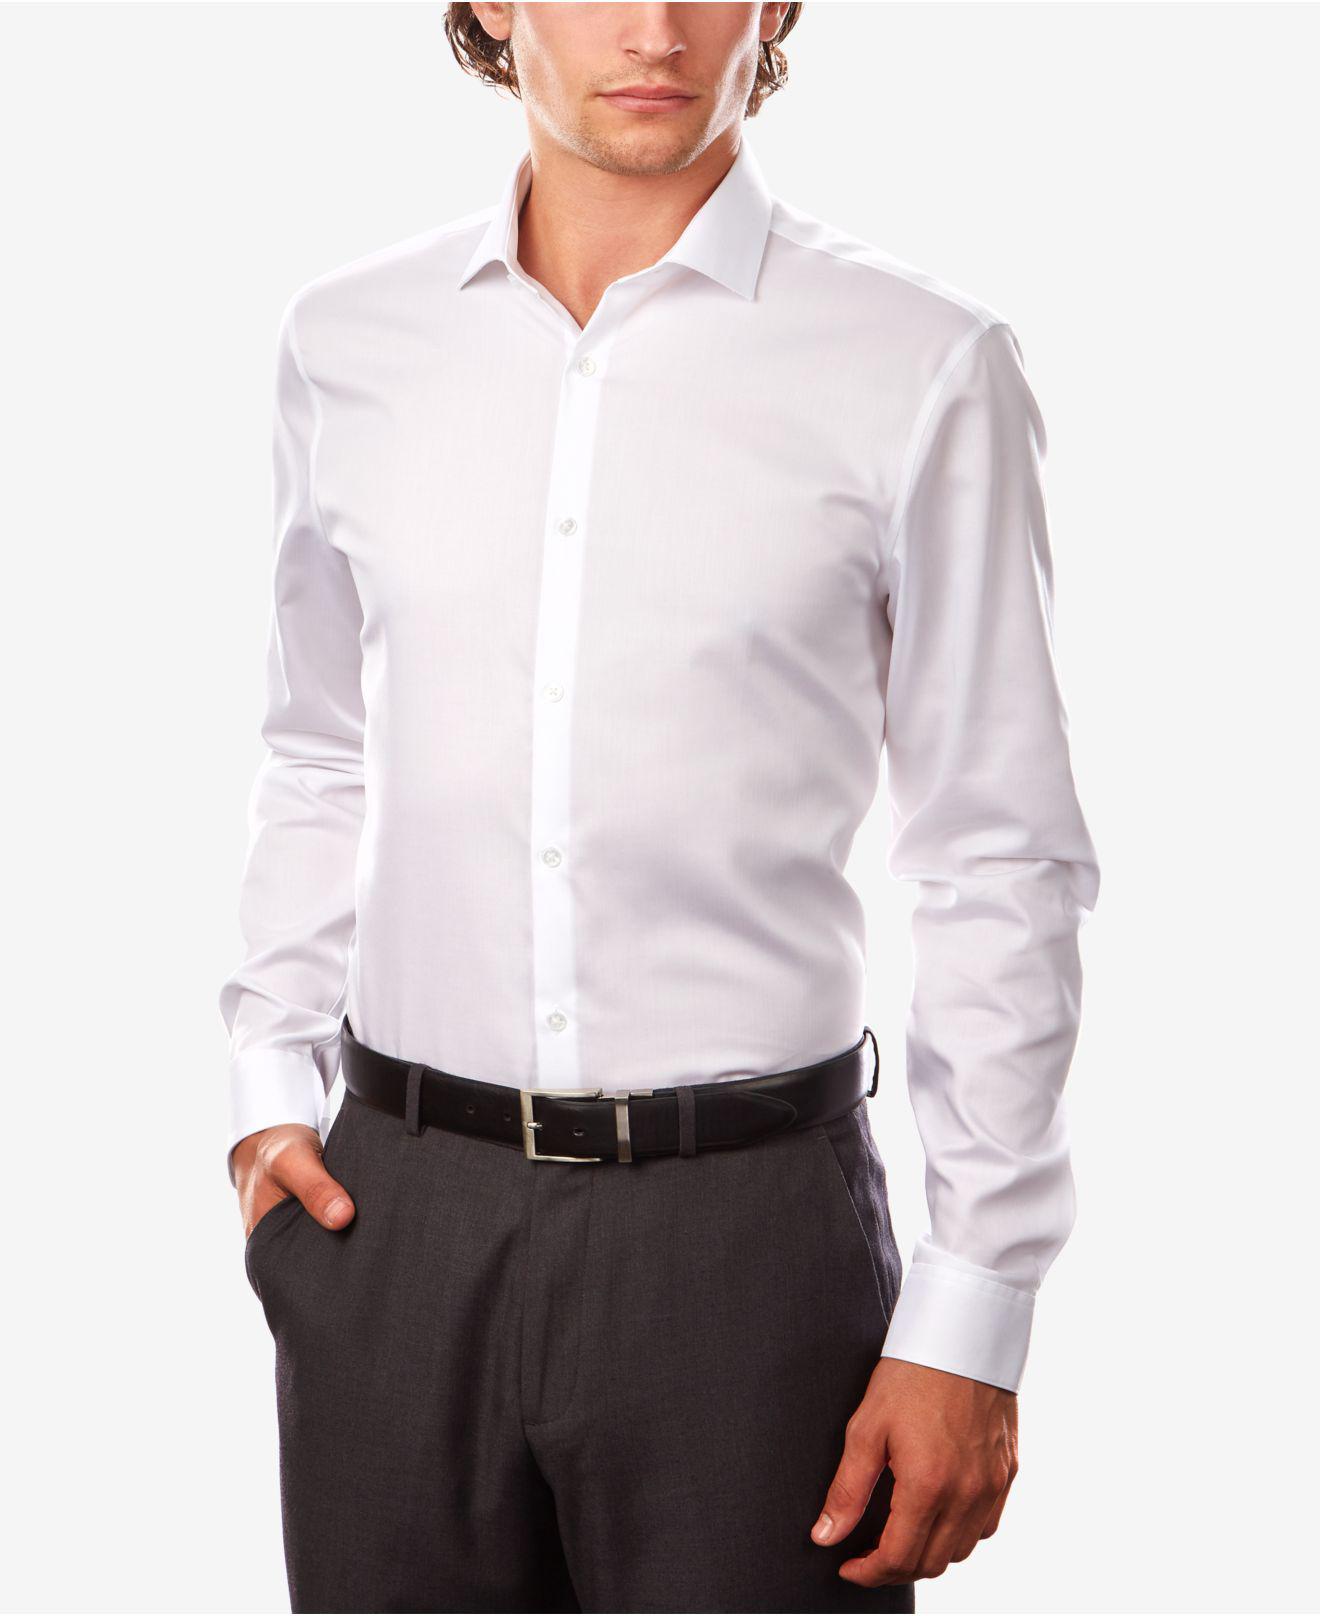 Calvin Klein Cotton Steel Extra-slim Fit Non-iron Performance Herringbone  Dress Shirt in White for Men - Save 67% | Lyst